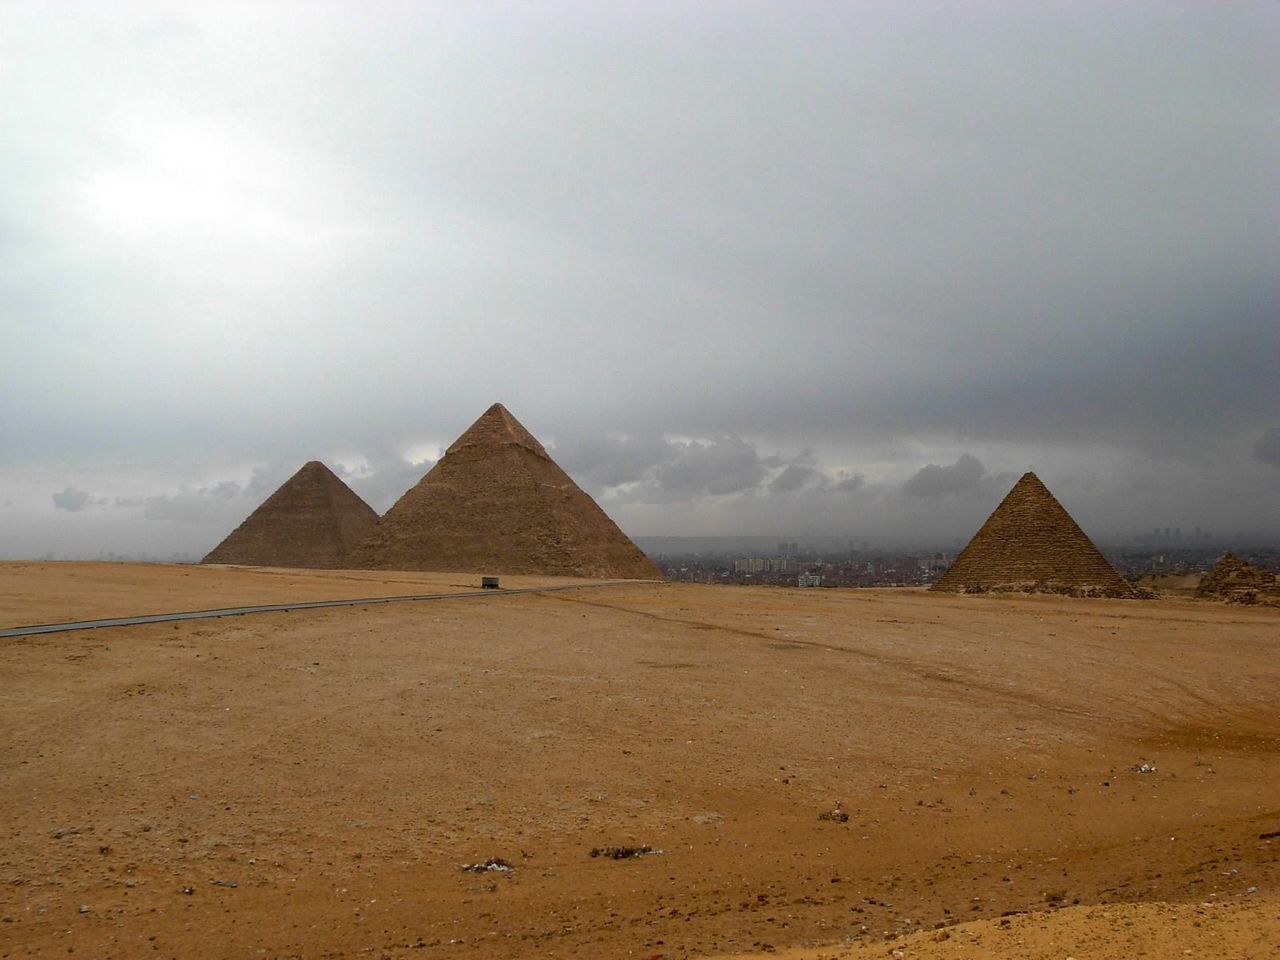 Pyramids in desert against cloudy sky